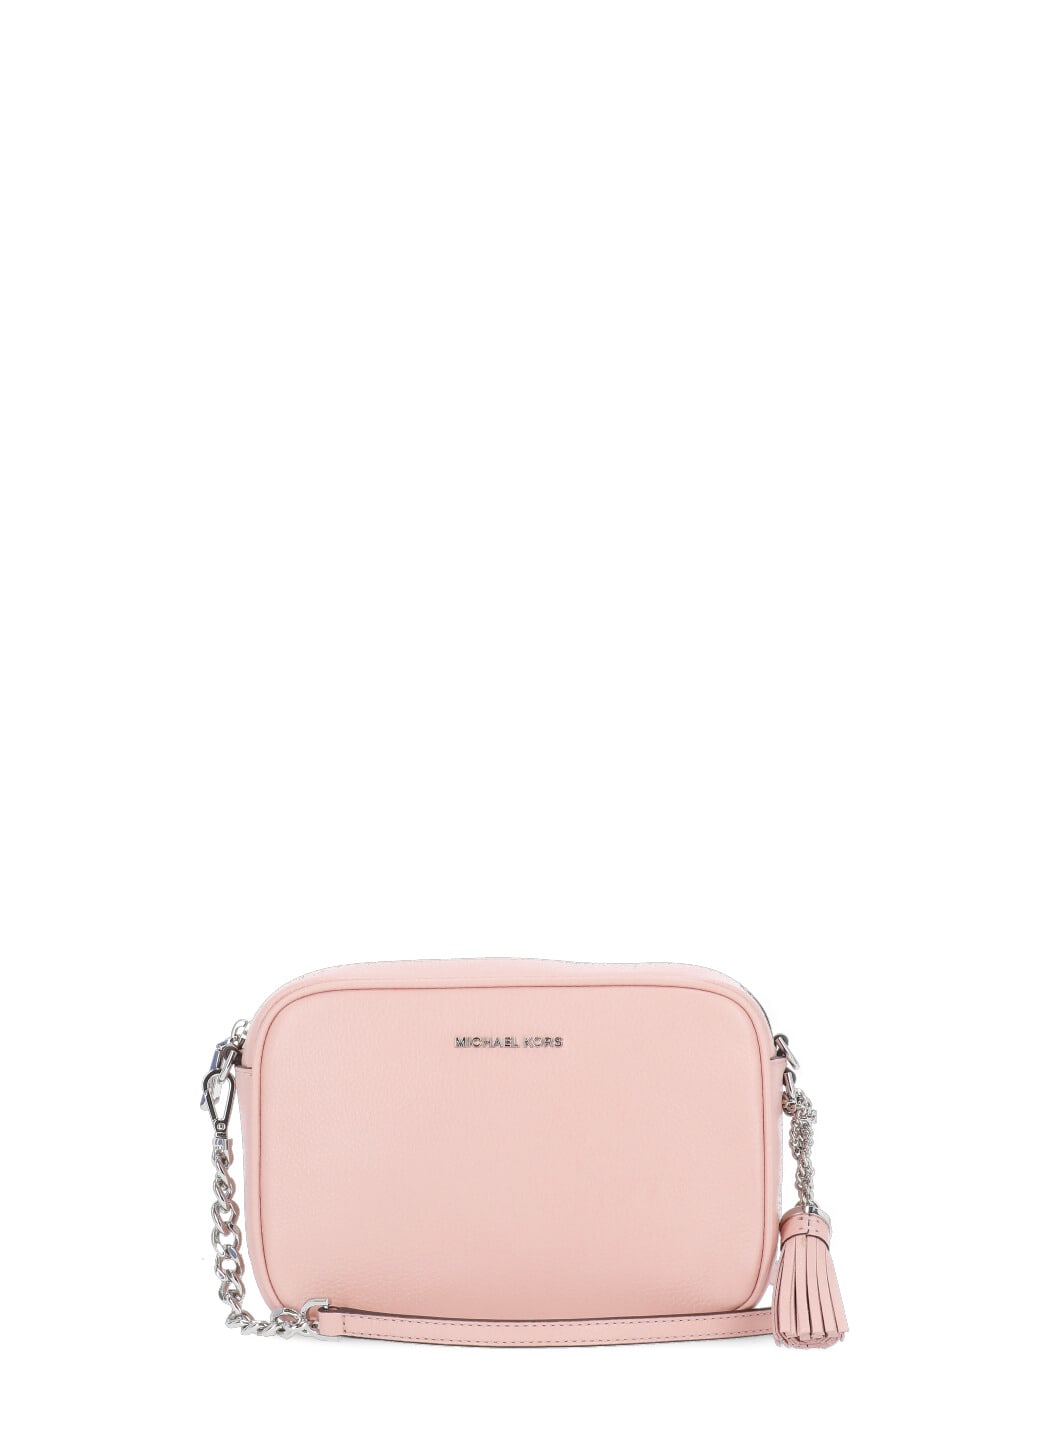 Michael Kors Scalloped Bicolor Pebble Leather Pocket Camera Bag  Reviews   Handbags  Accessories  Macys